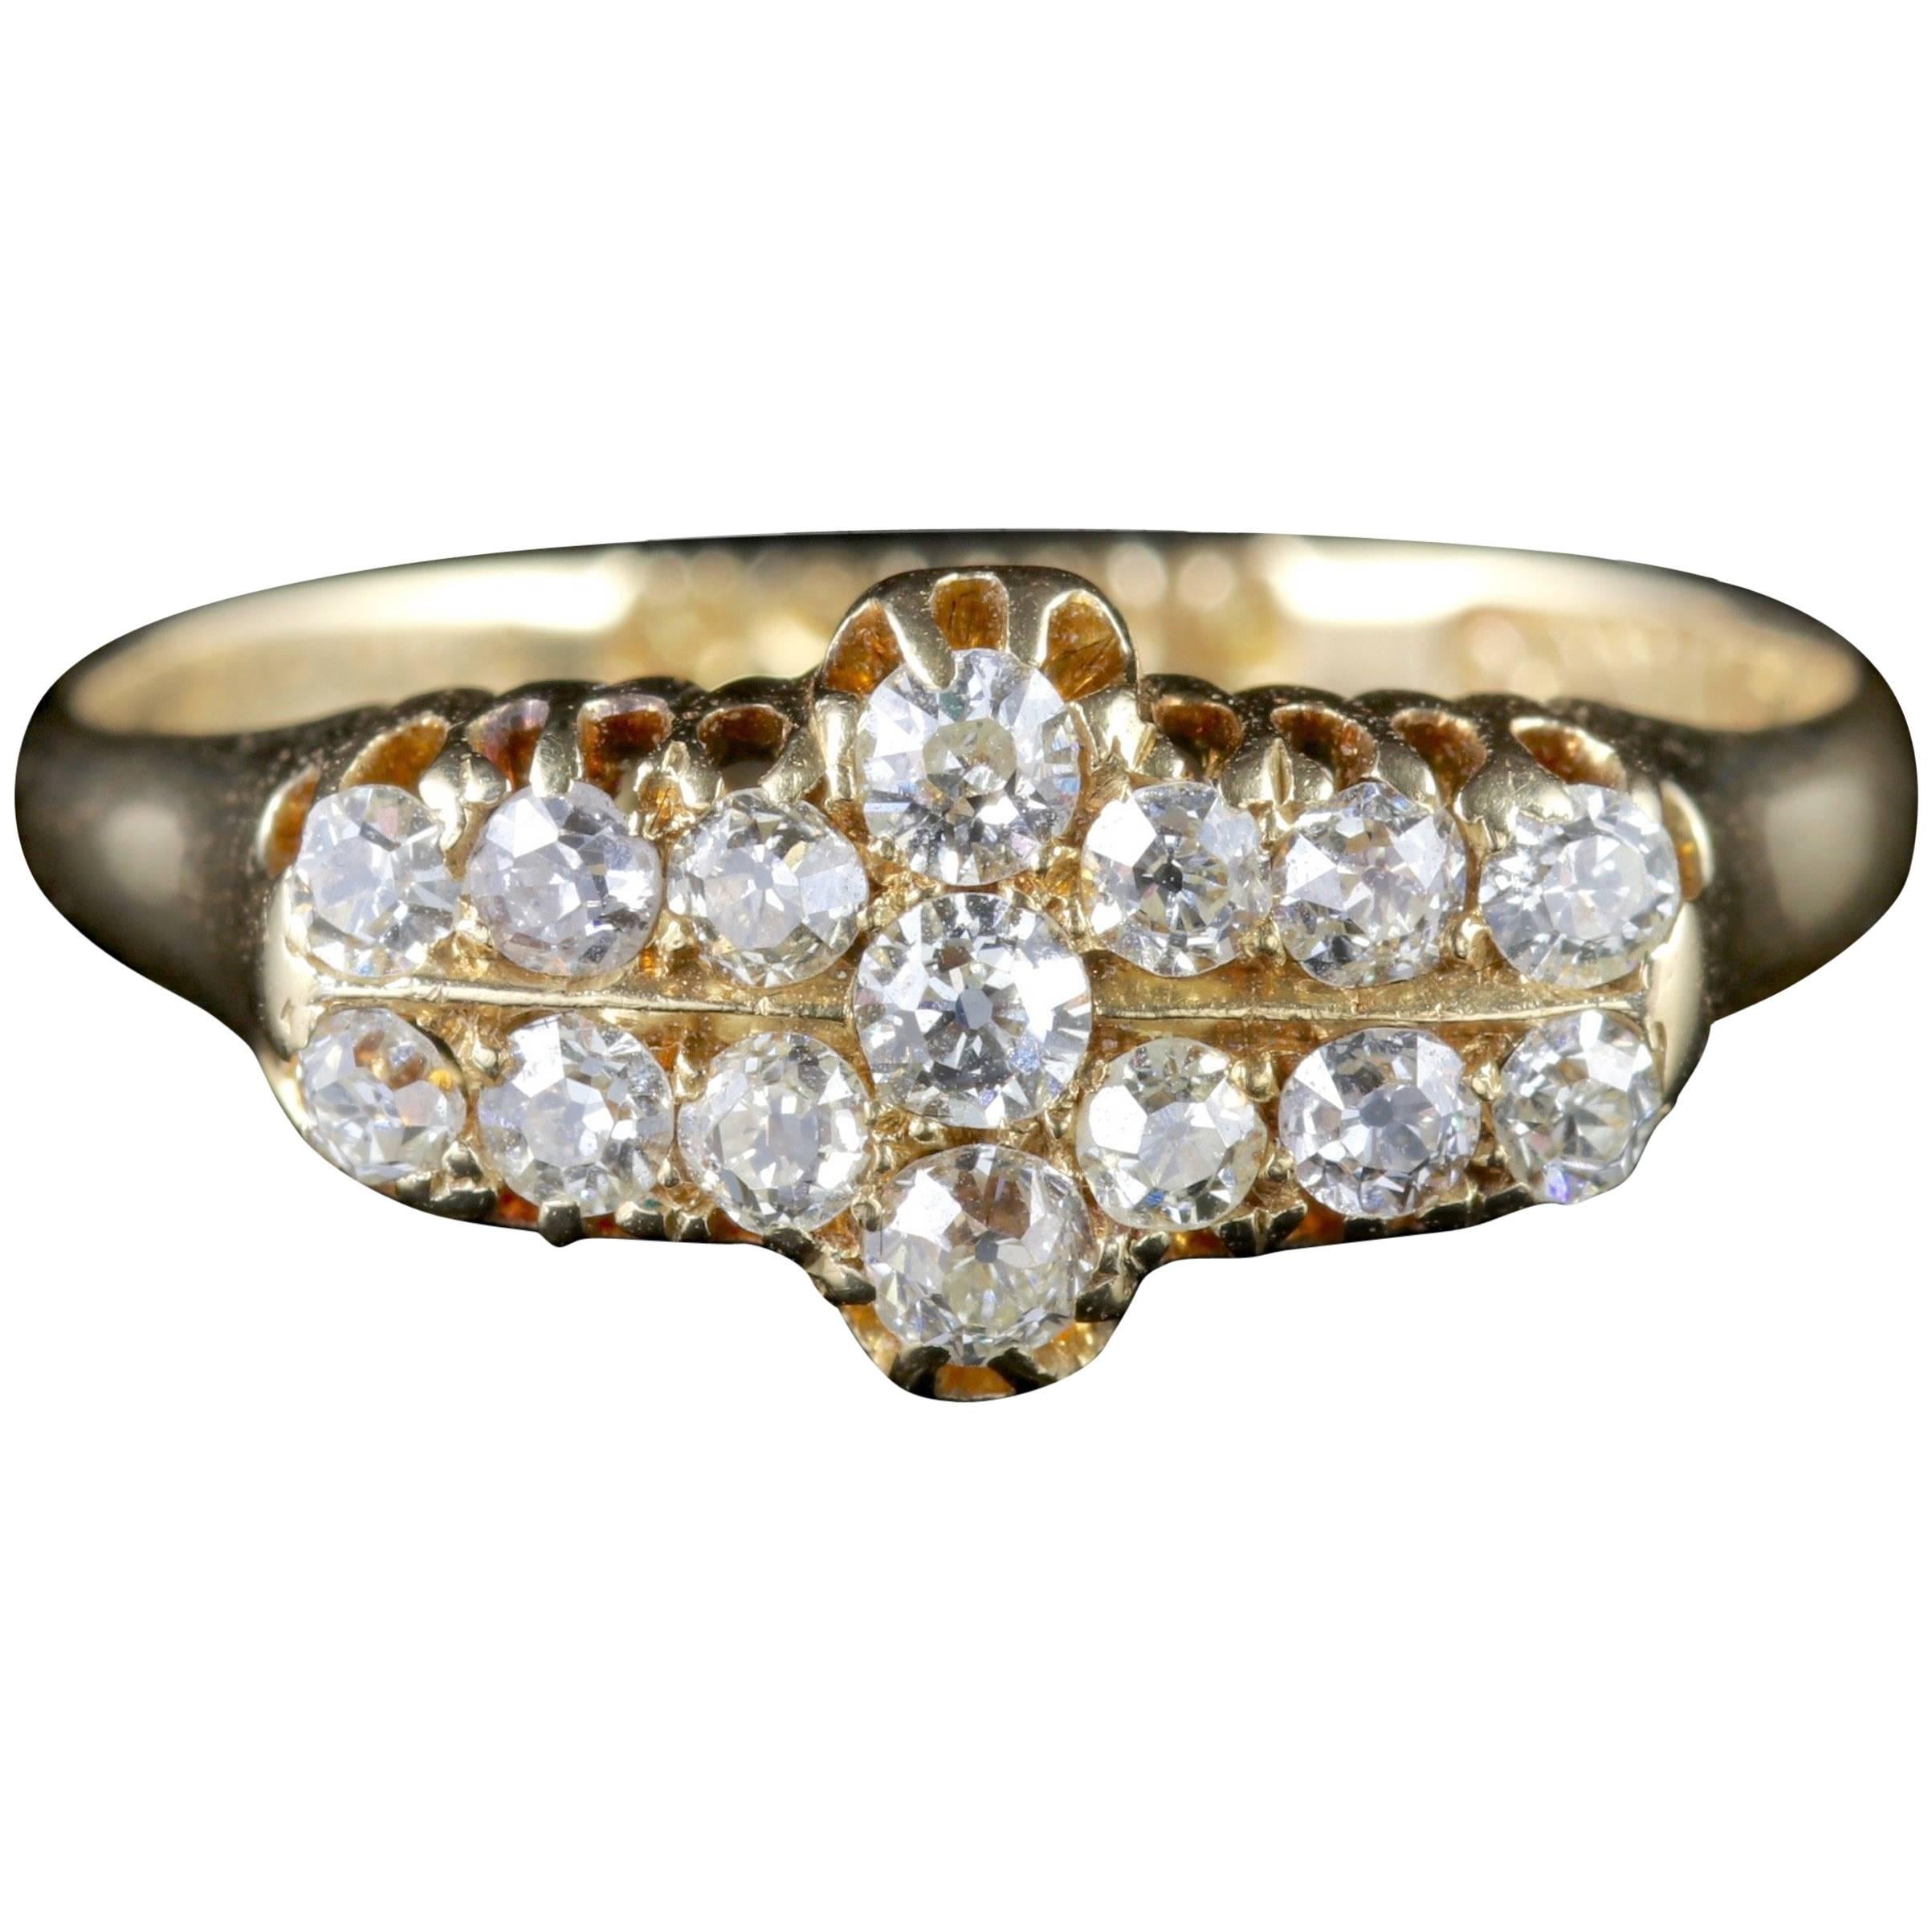 Antique Edwardian Diamond Ring Chester, 1910